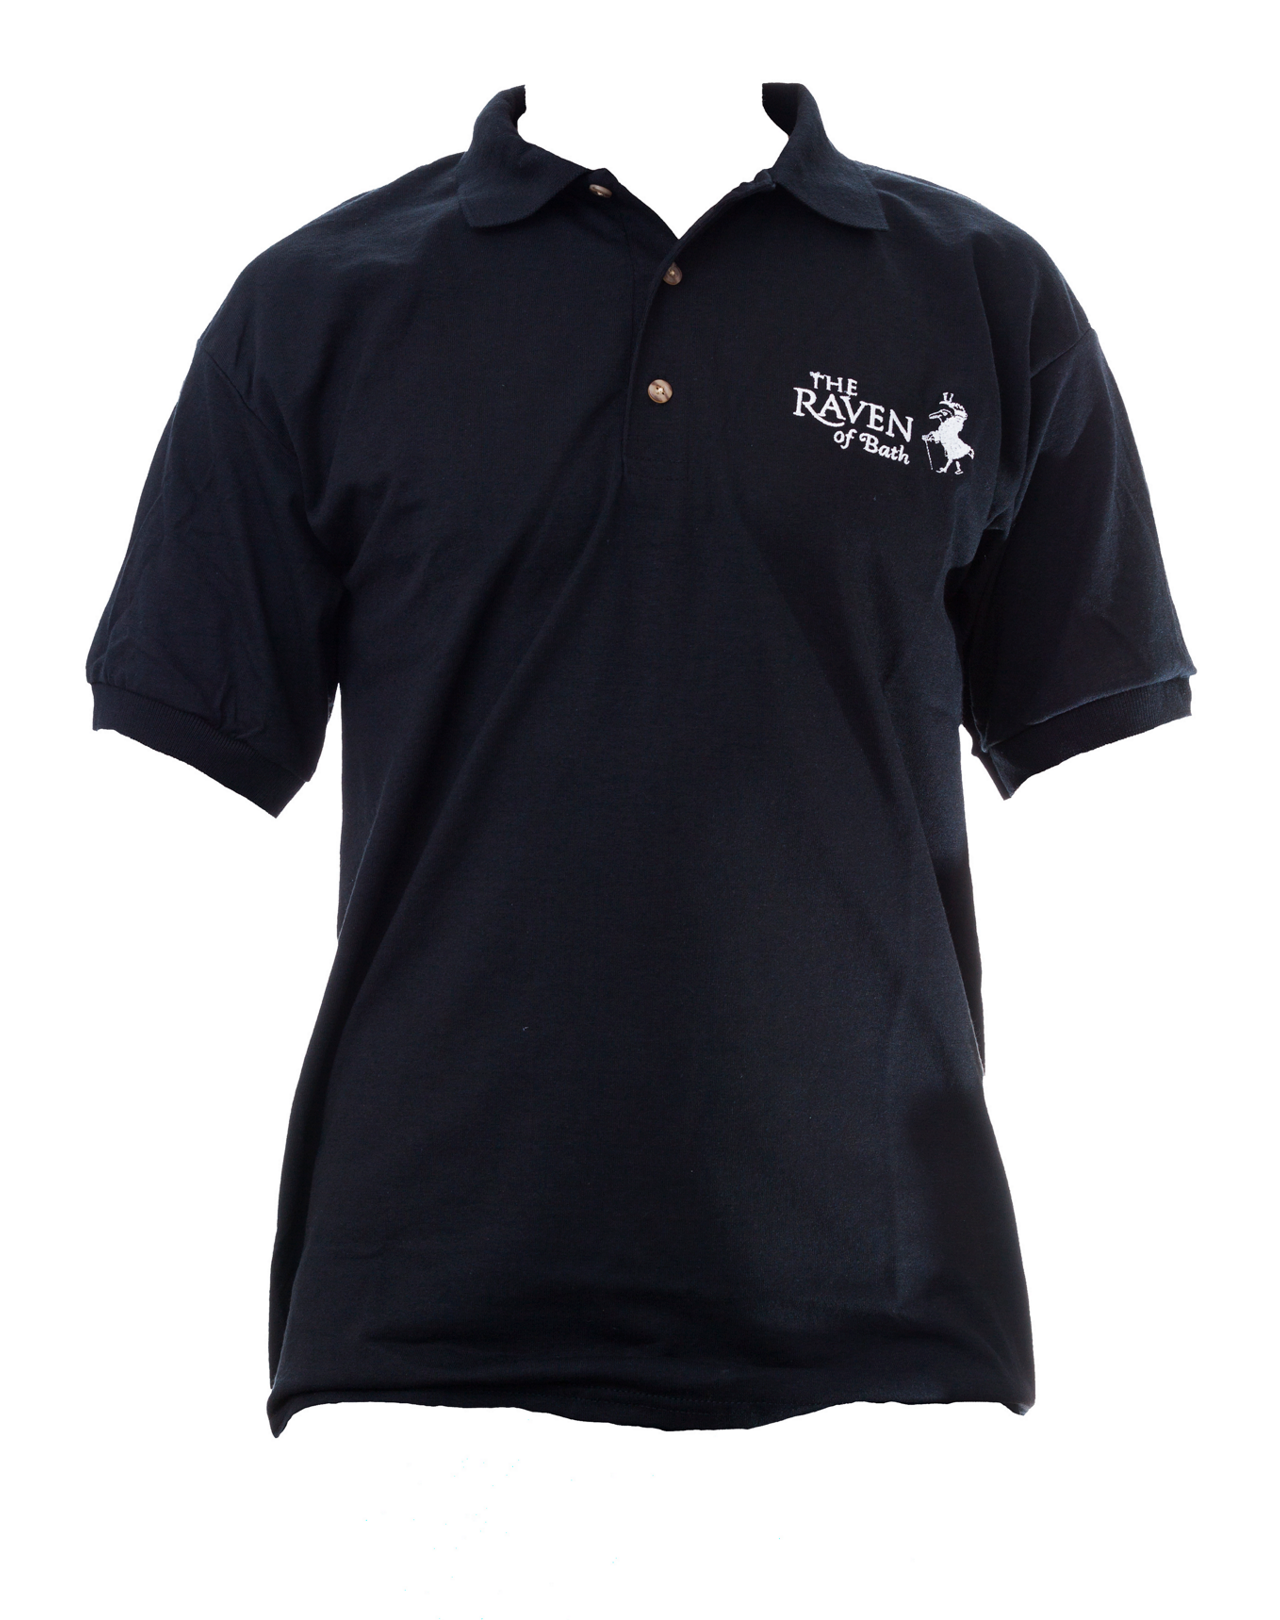 Black Polo Shirt with The Raven Logo